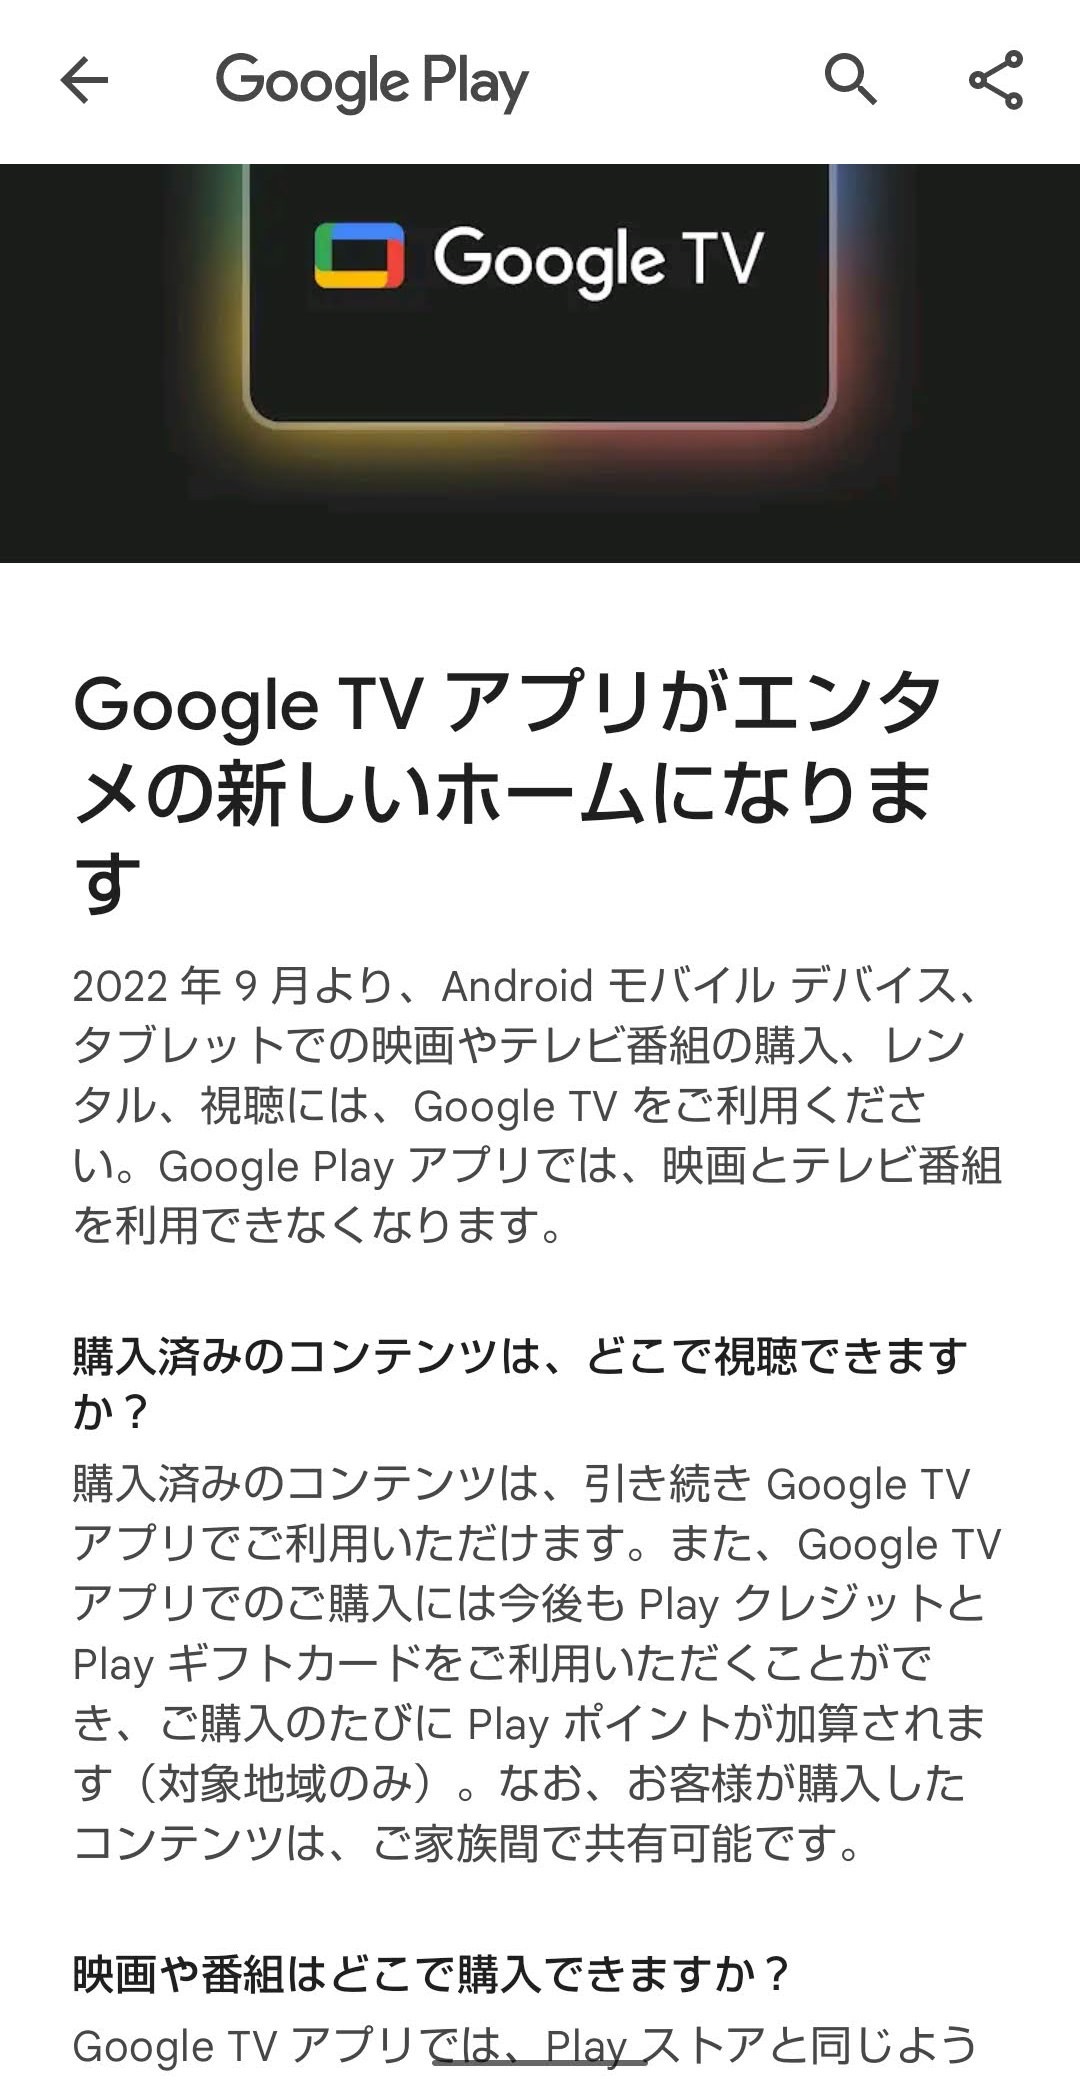 Google Play GoogleTV 映画移行  告知